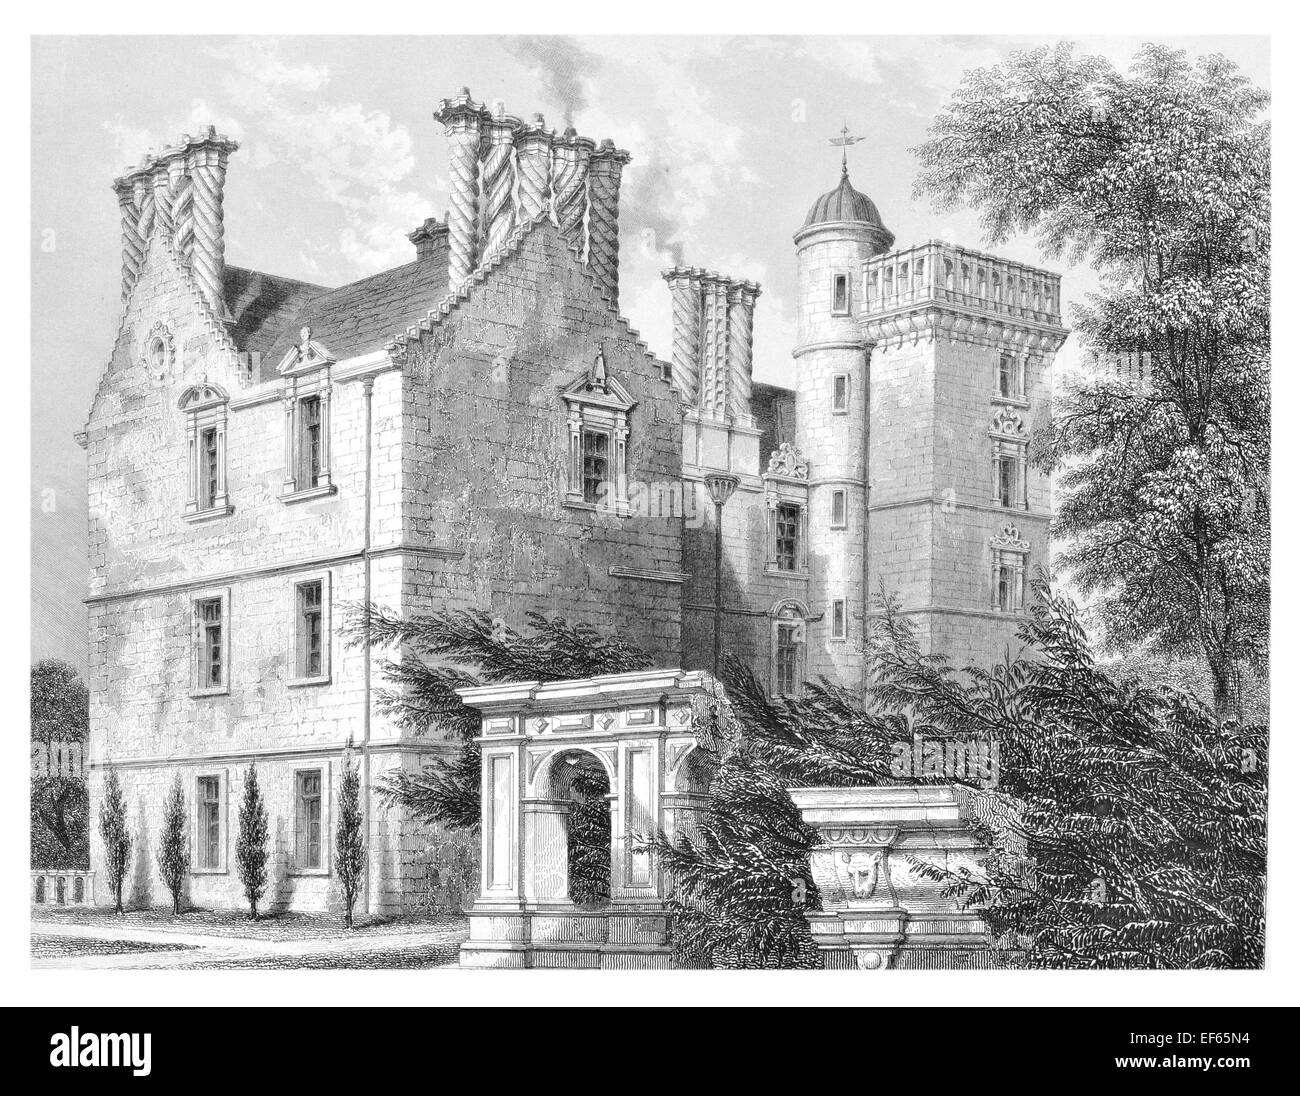 1852 Wintoun Winton House near Tranent Pencaitland Tranent East Lothian Foto de stock